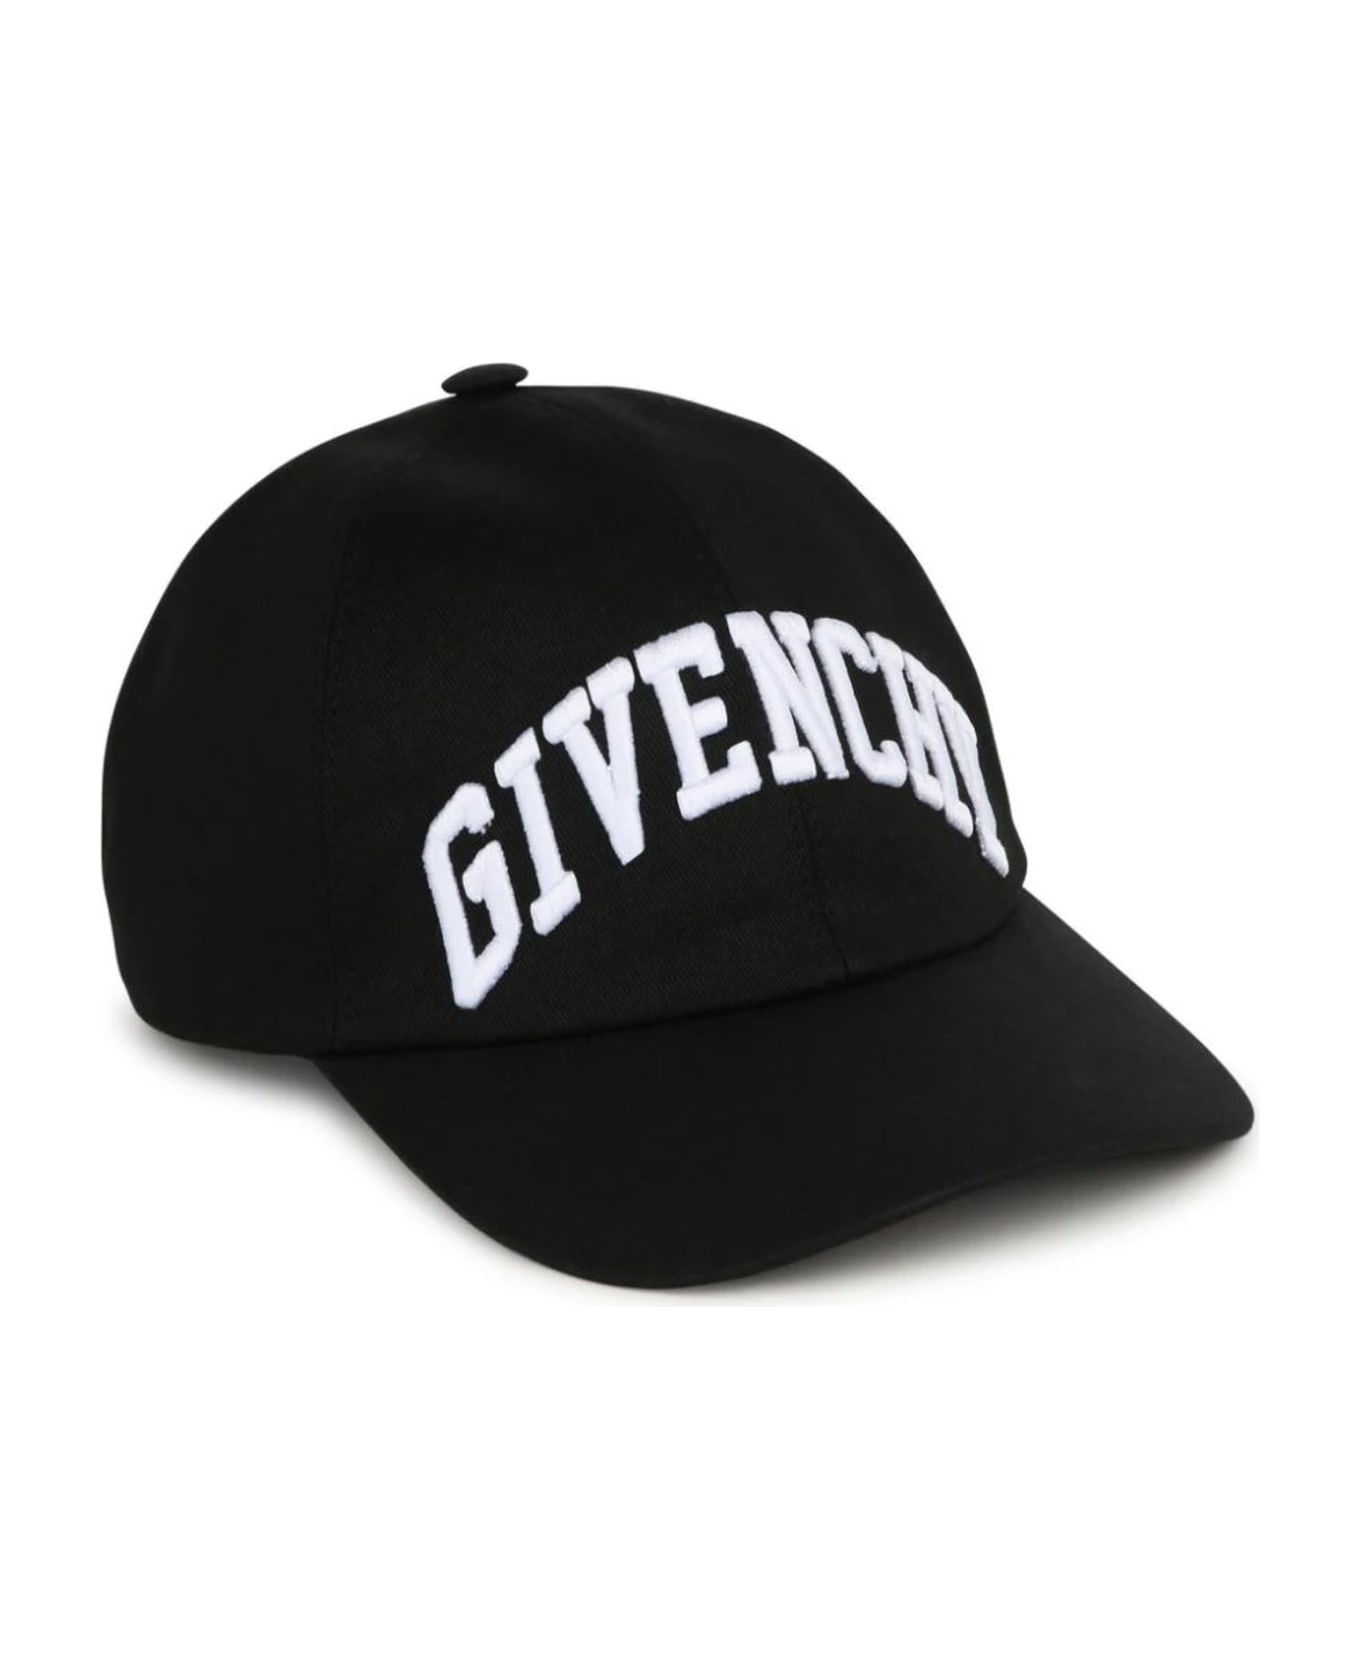 Givenchy Kids Hats Black - Black